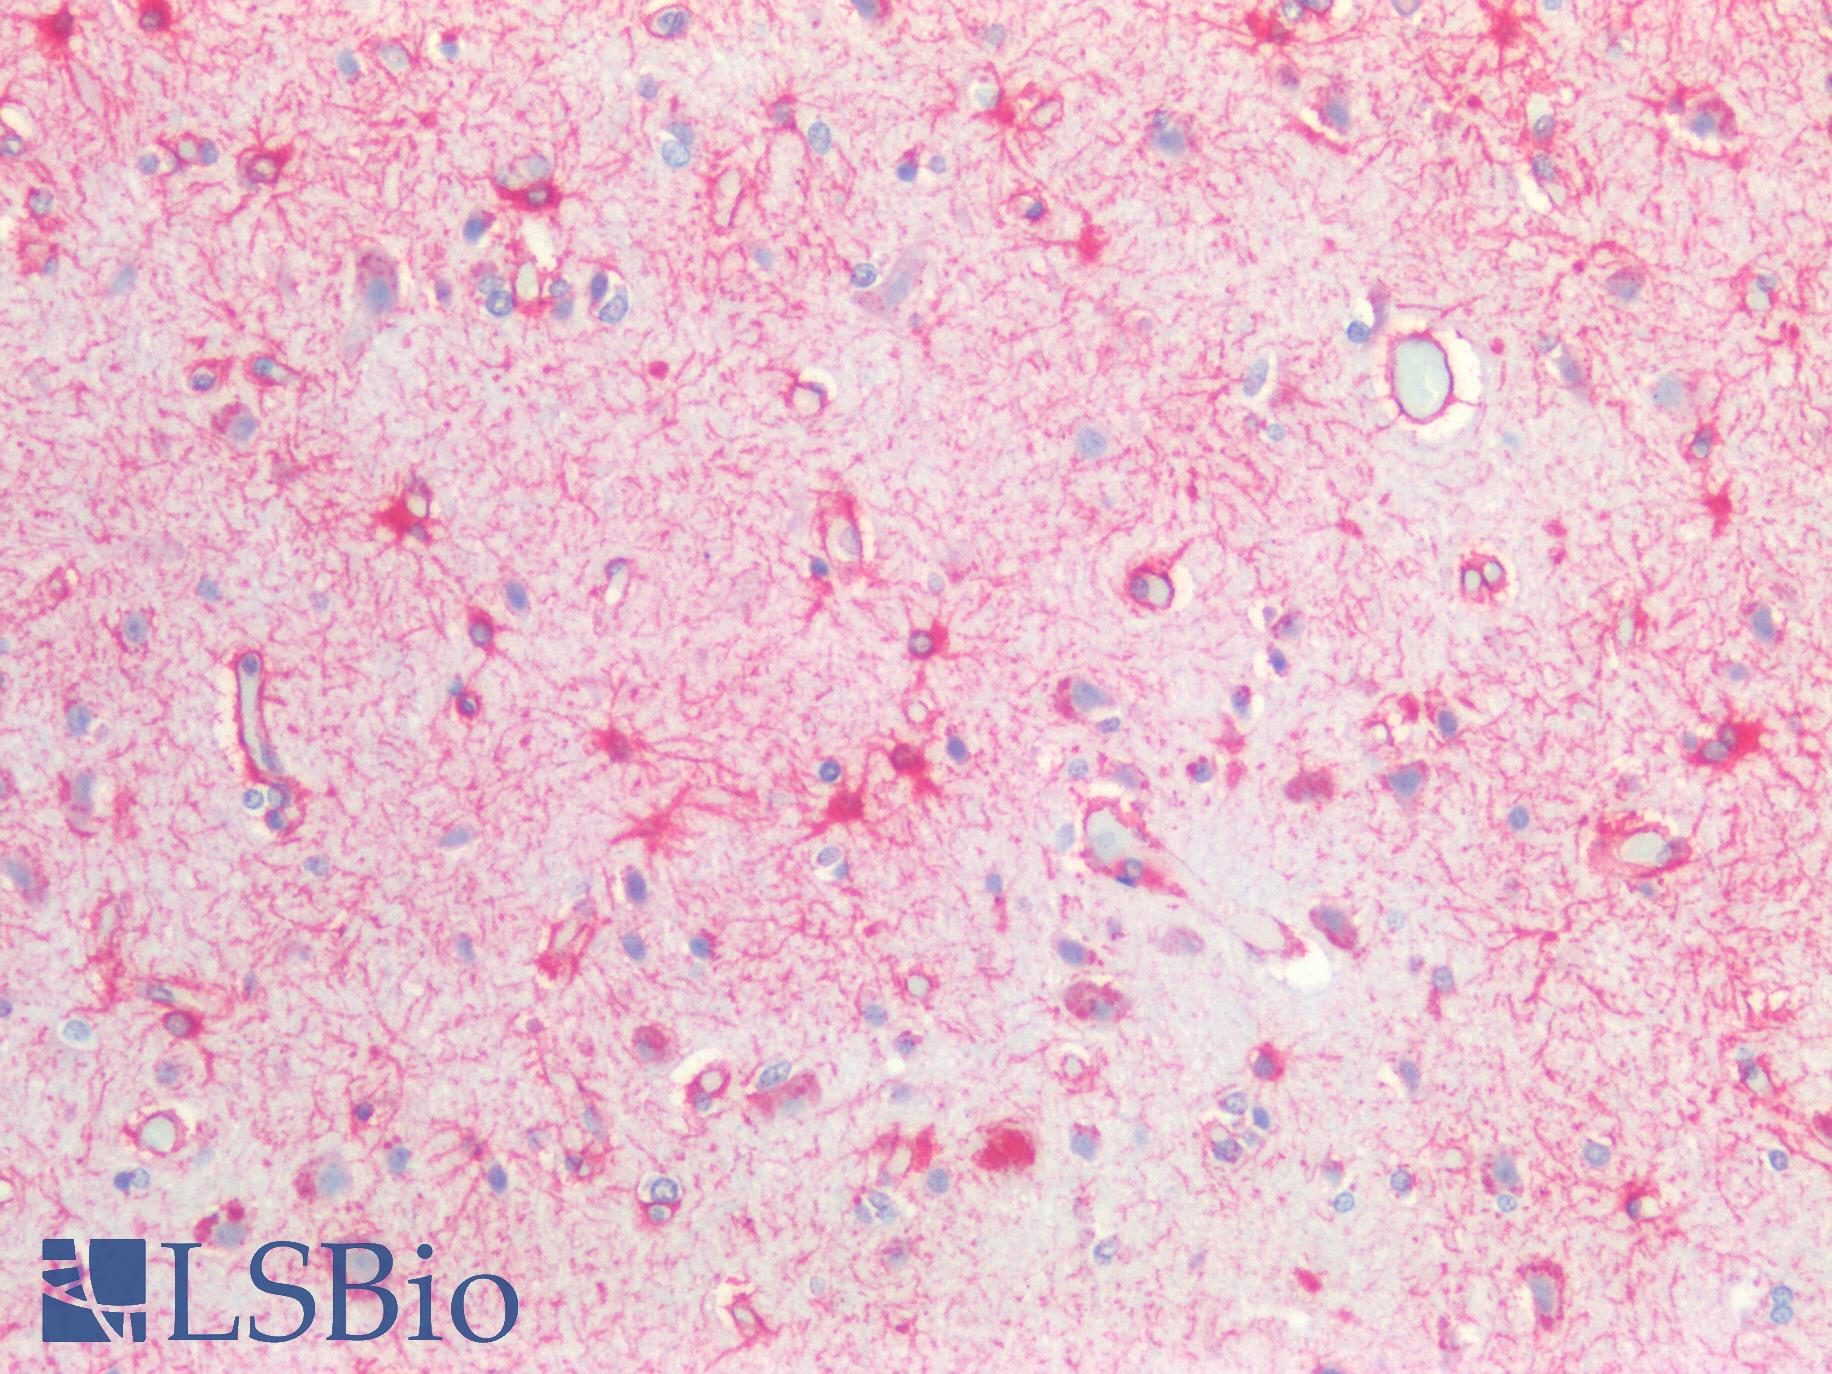 GFAP Antibody - Human Brain, Cortex: Formalin-Fixed, Paraffin-Embedded (FFPE)